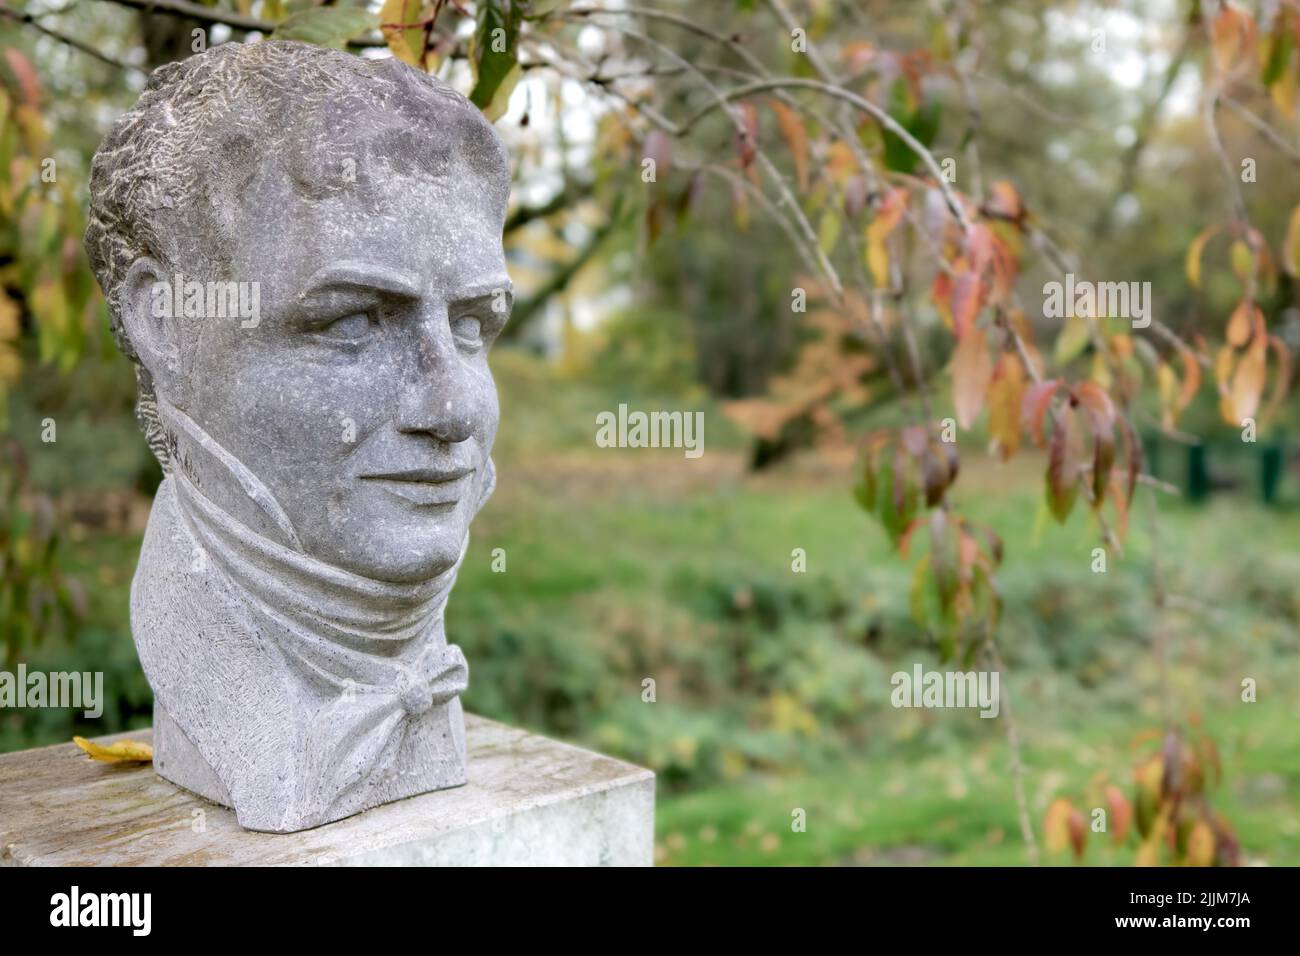 The stone sculpture of Alexander von Humboldt in Bottrop, Germany Stock Photo